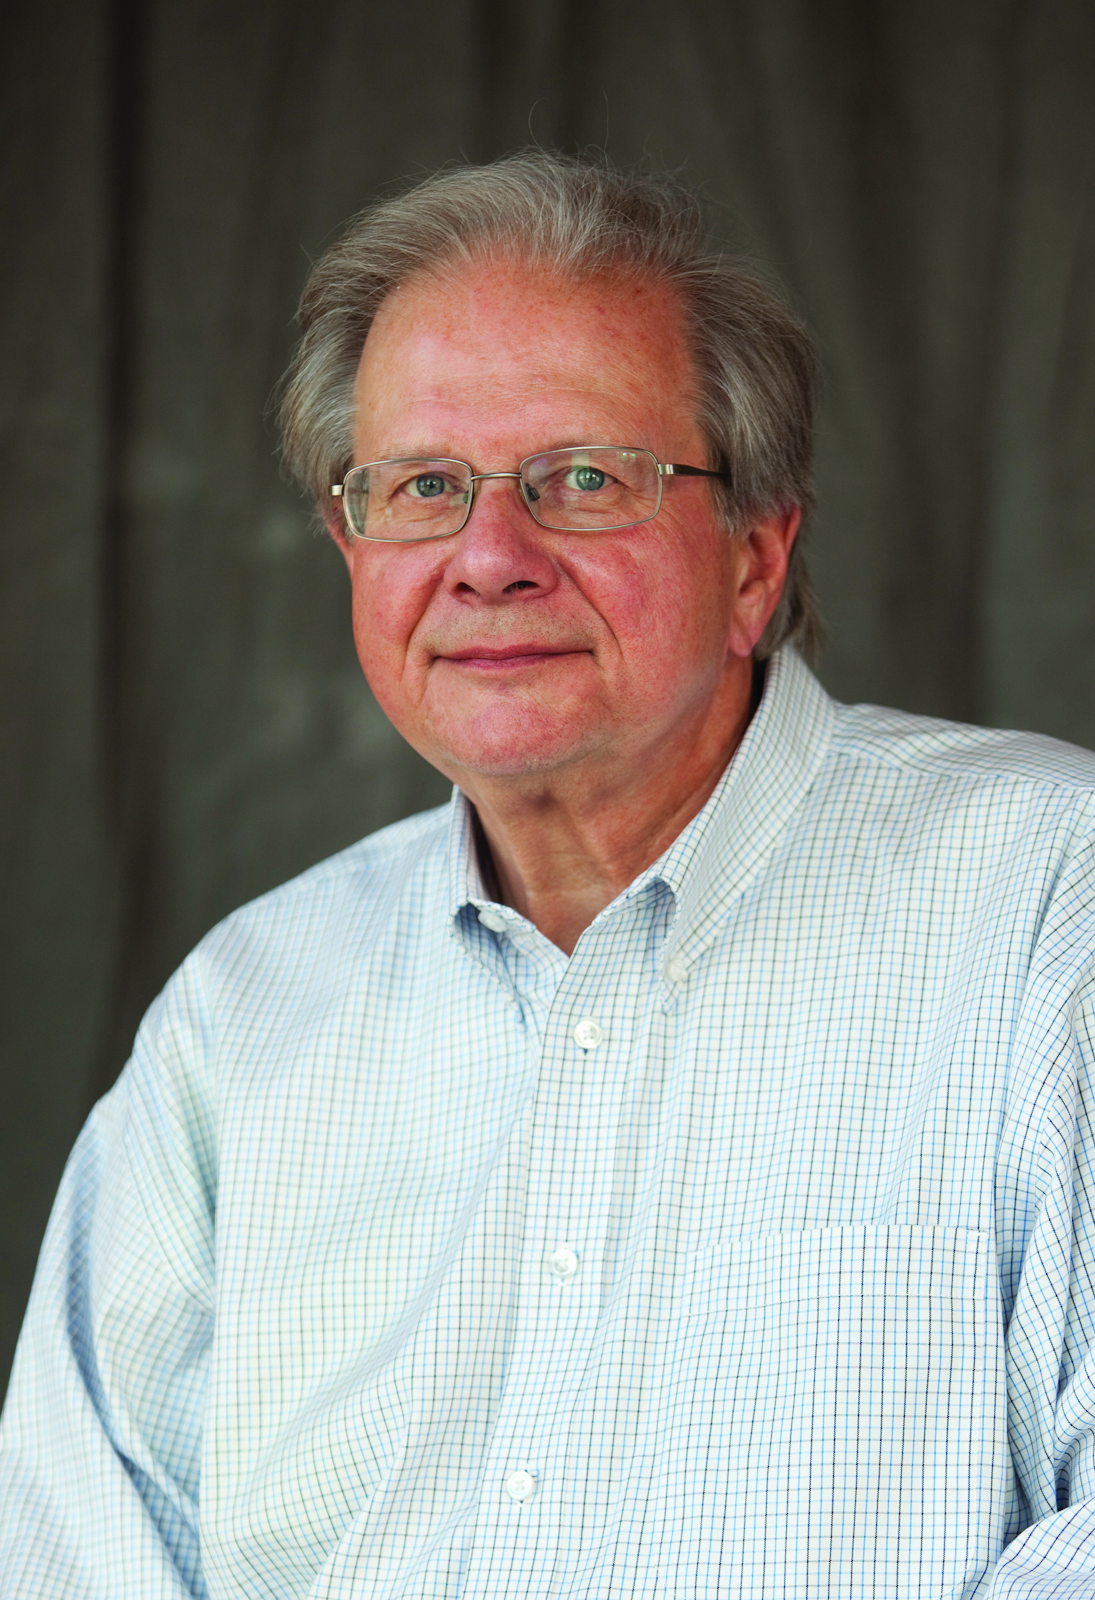 Dick Kochanek, accounting professor emeritus who retired in December after devoting 43 years to teaching